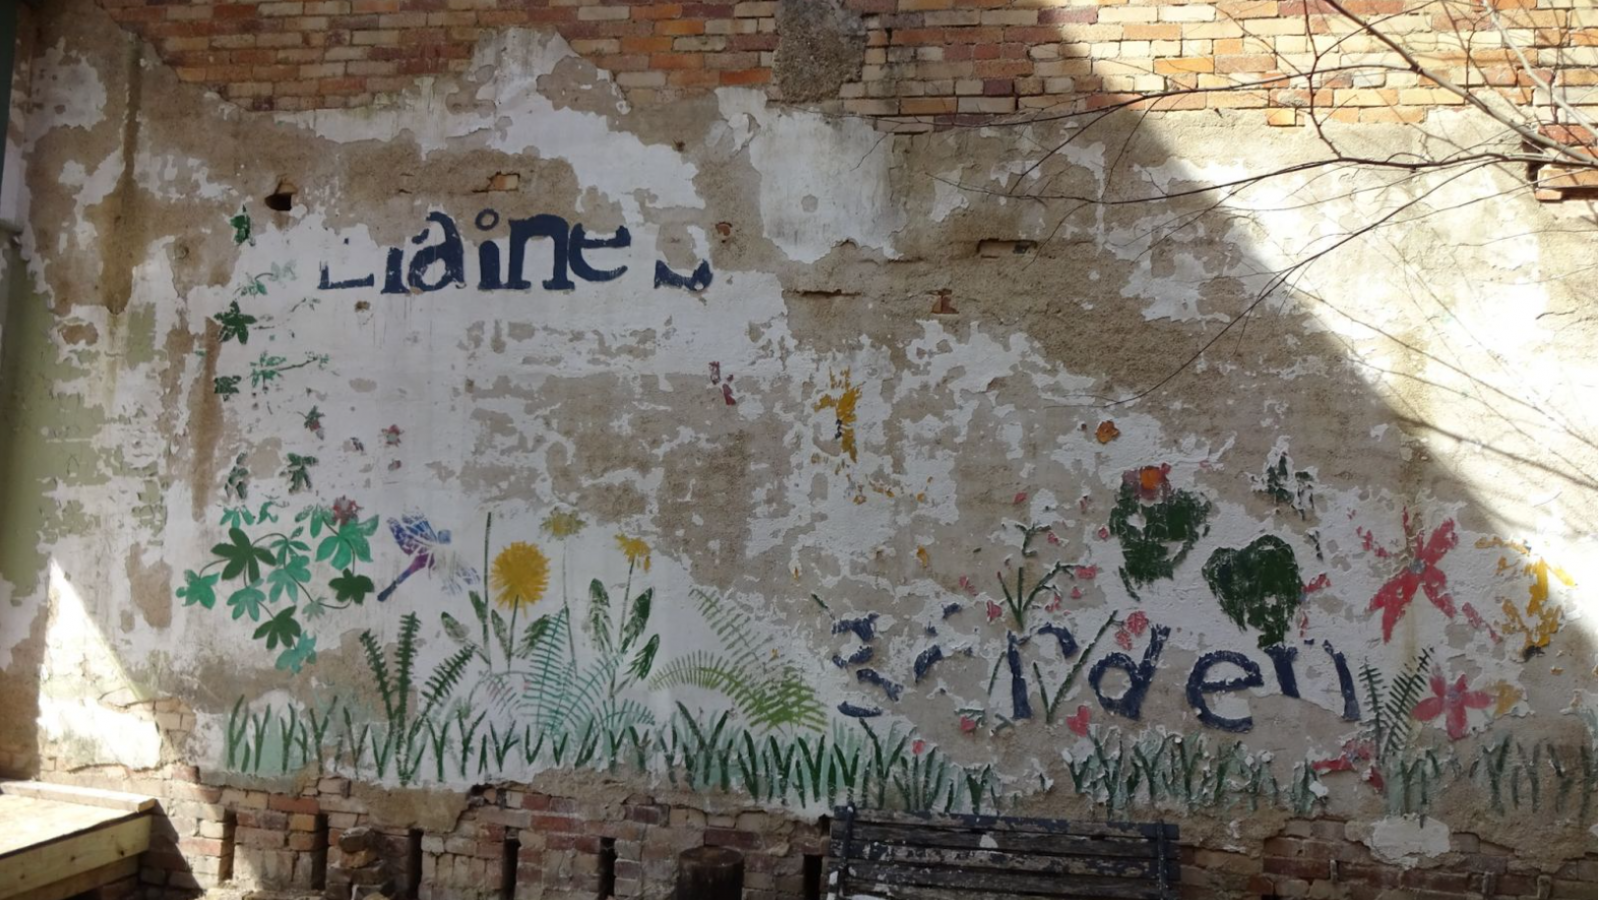 Elaine's Garden mural